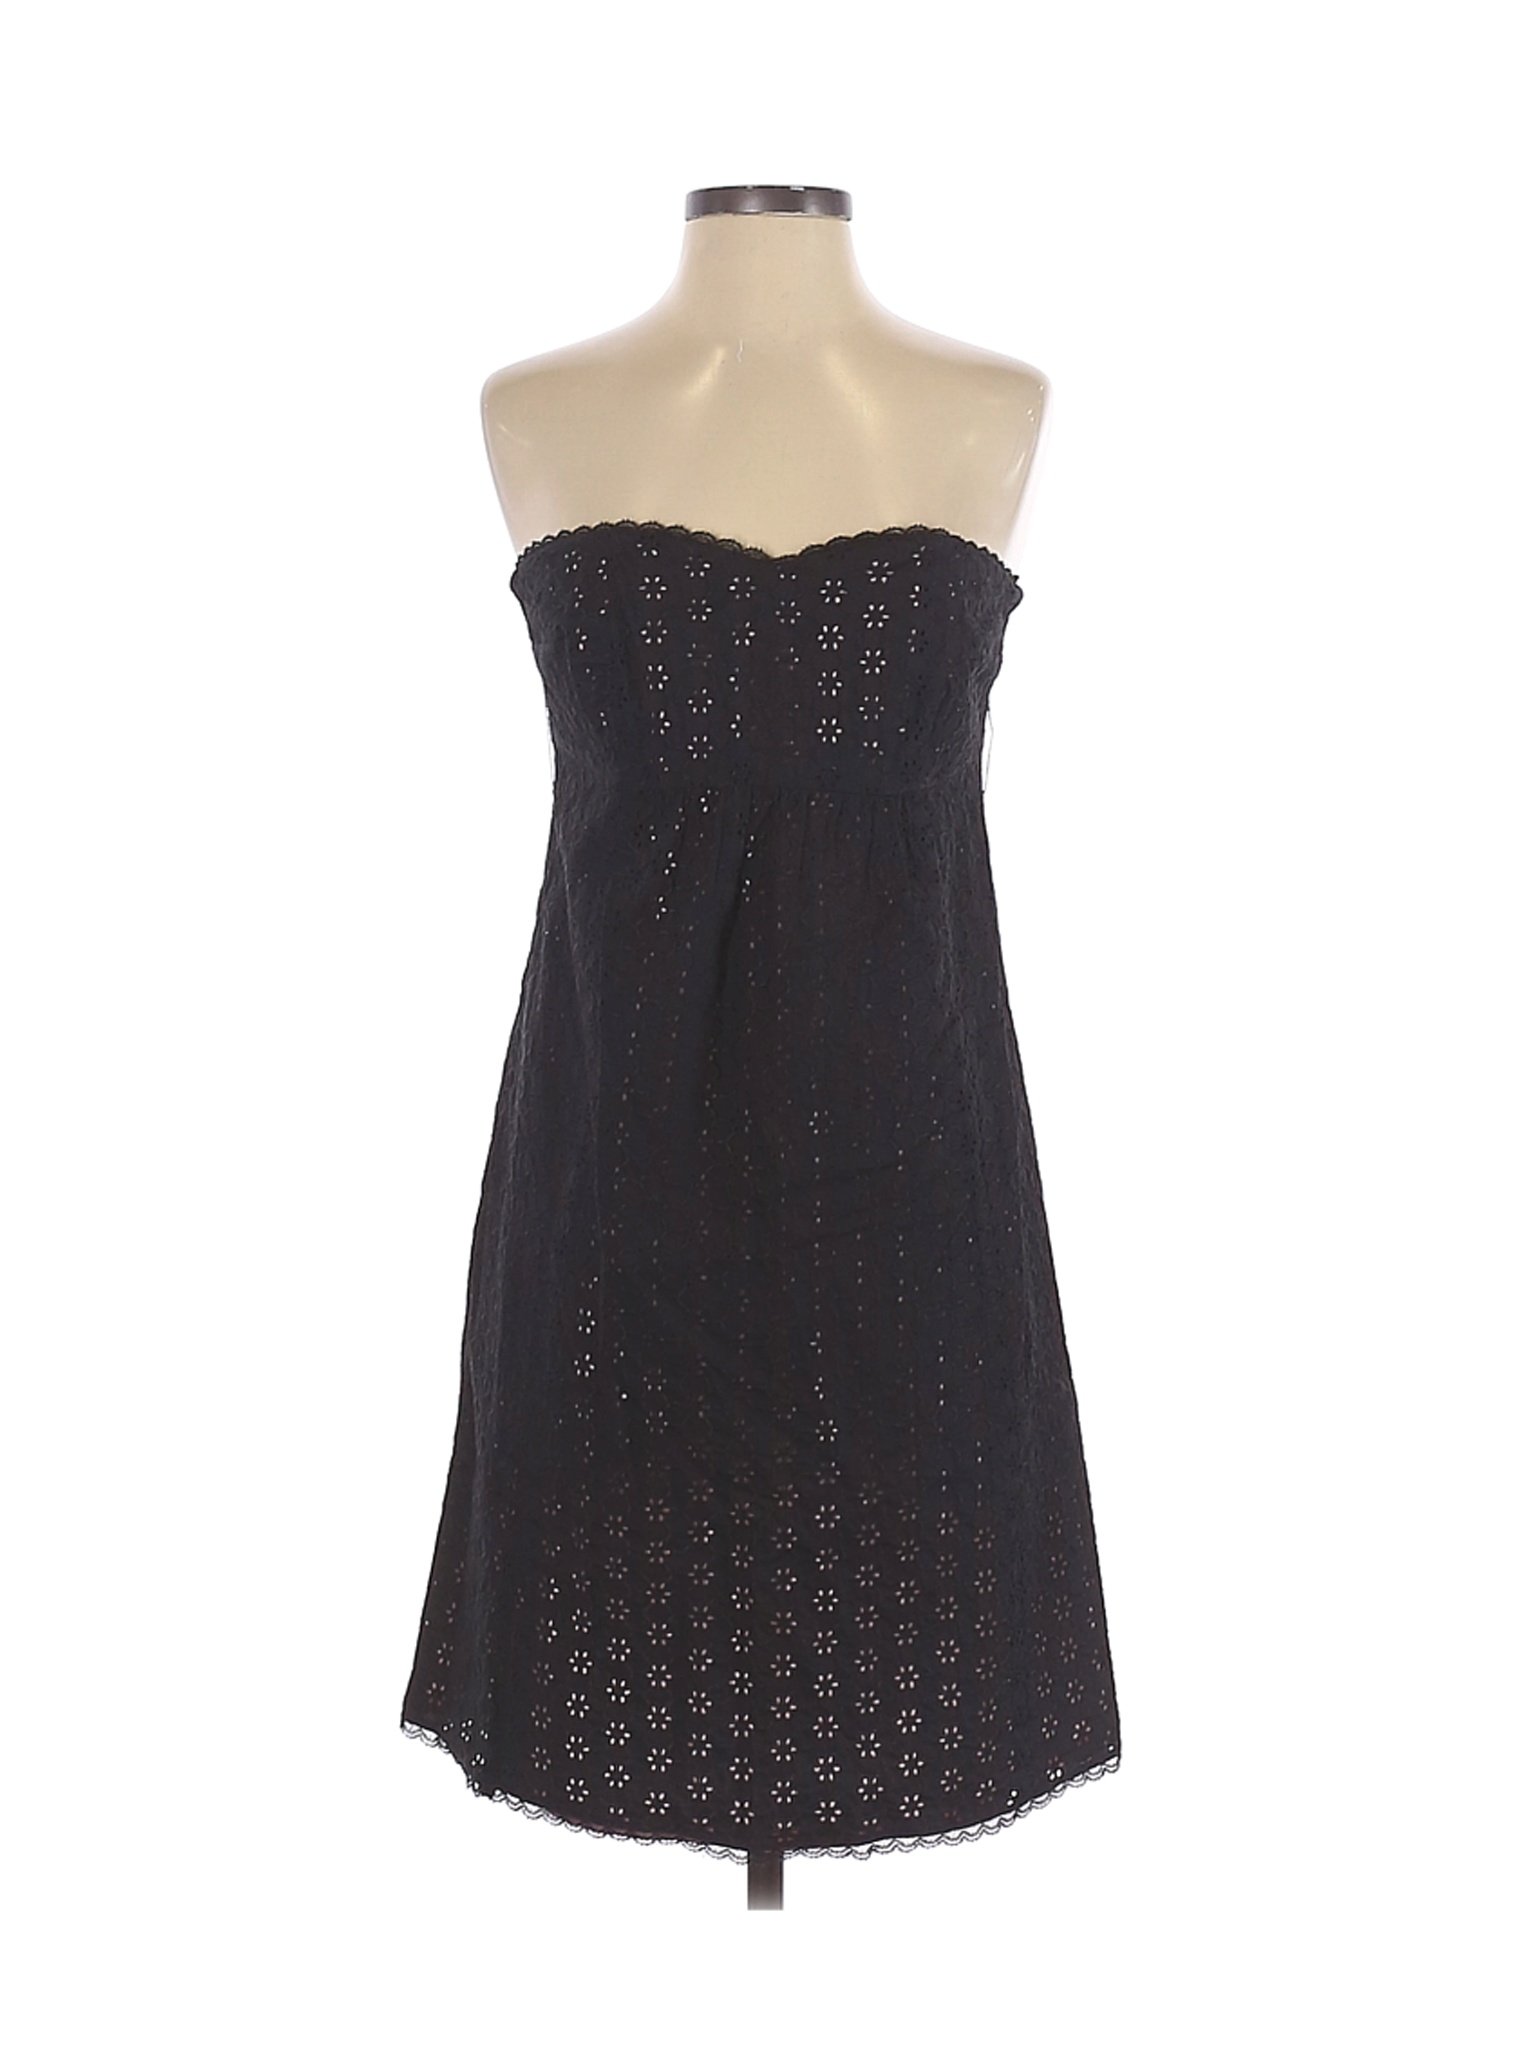 Shoshanna Women Black Cocktail Dress S | eBay